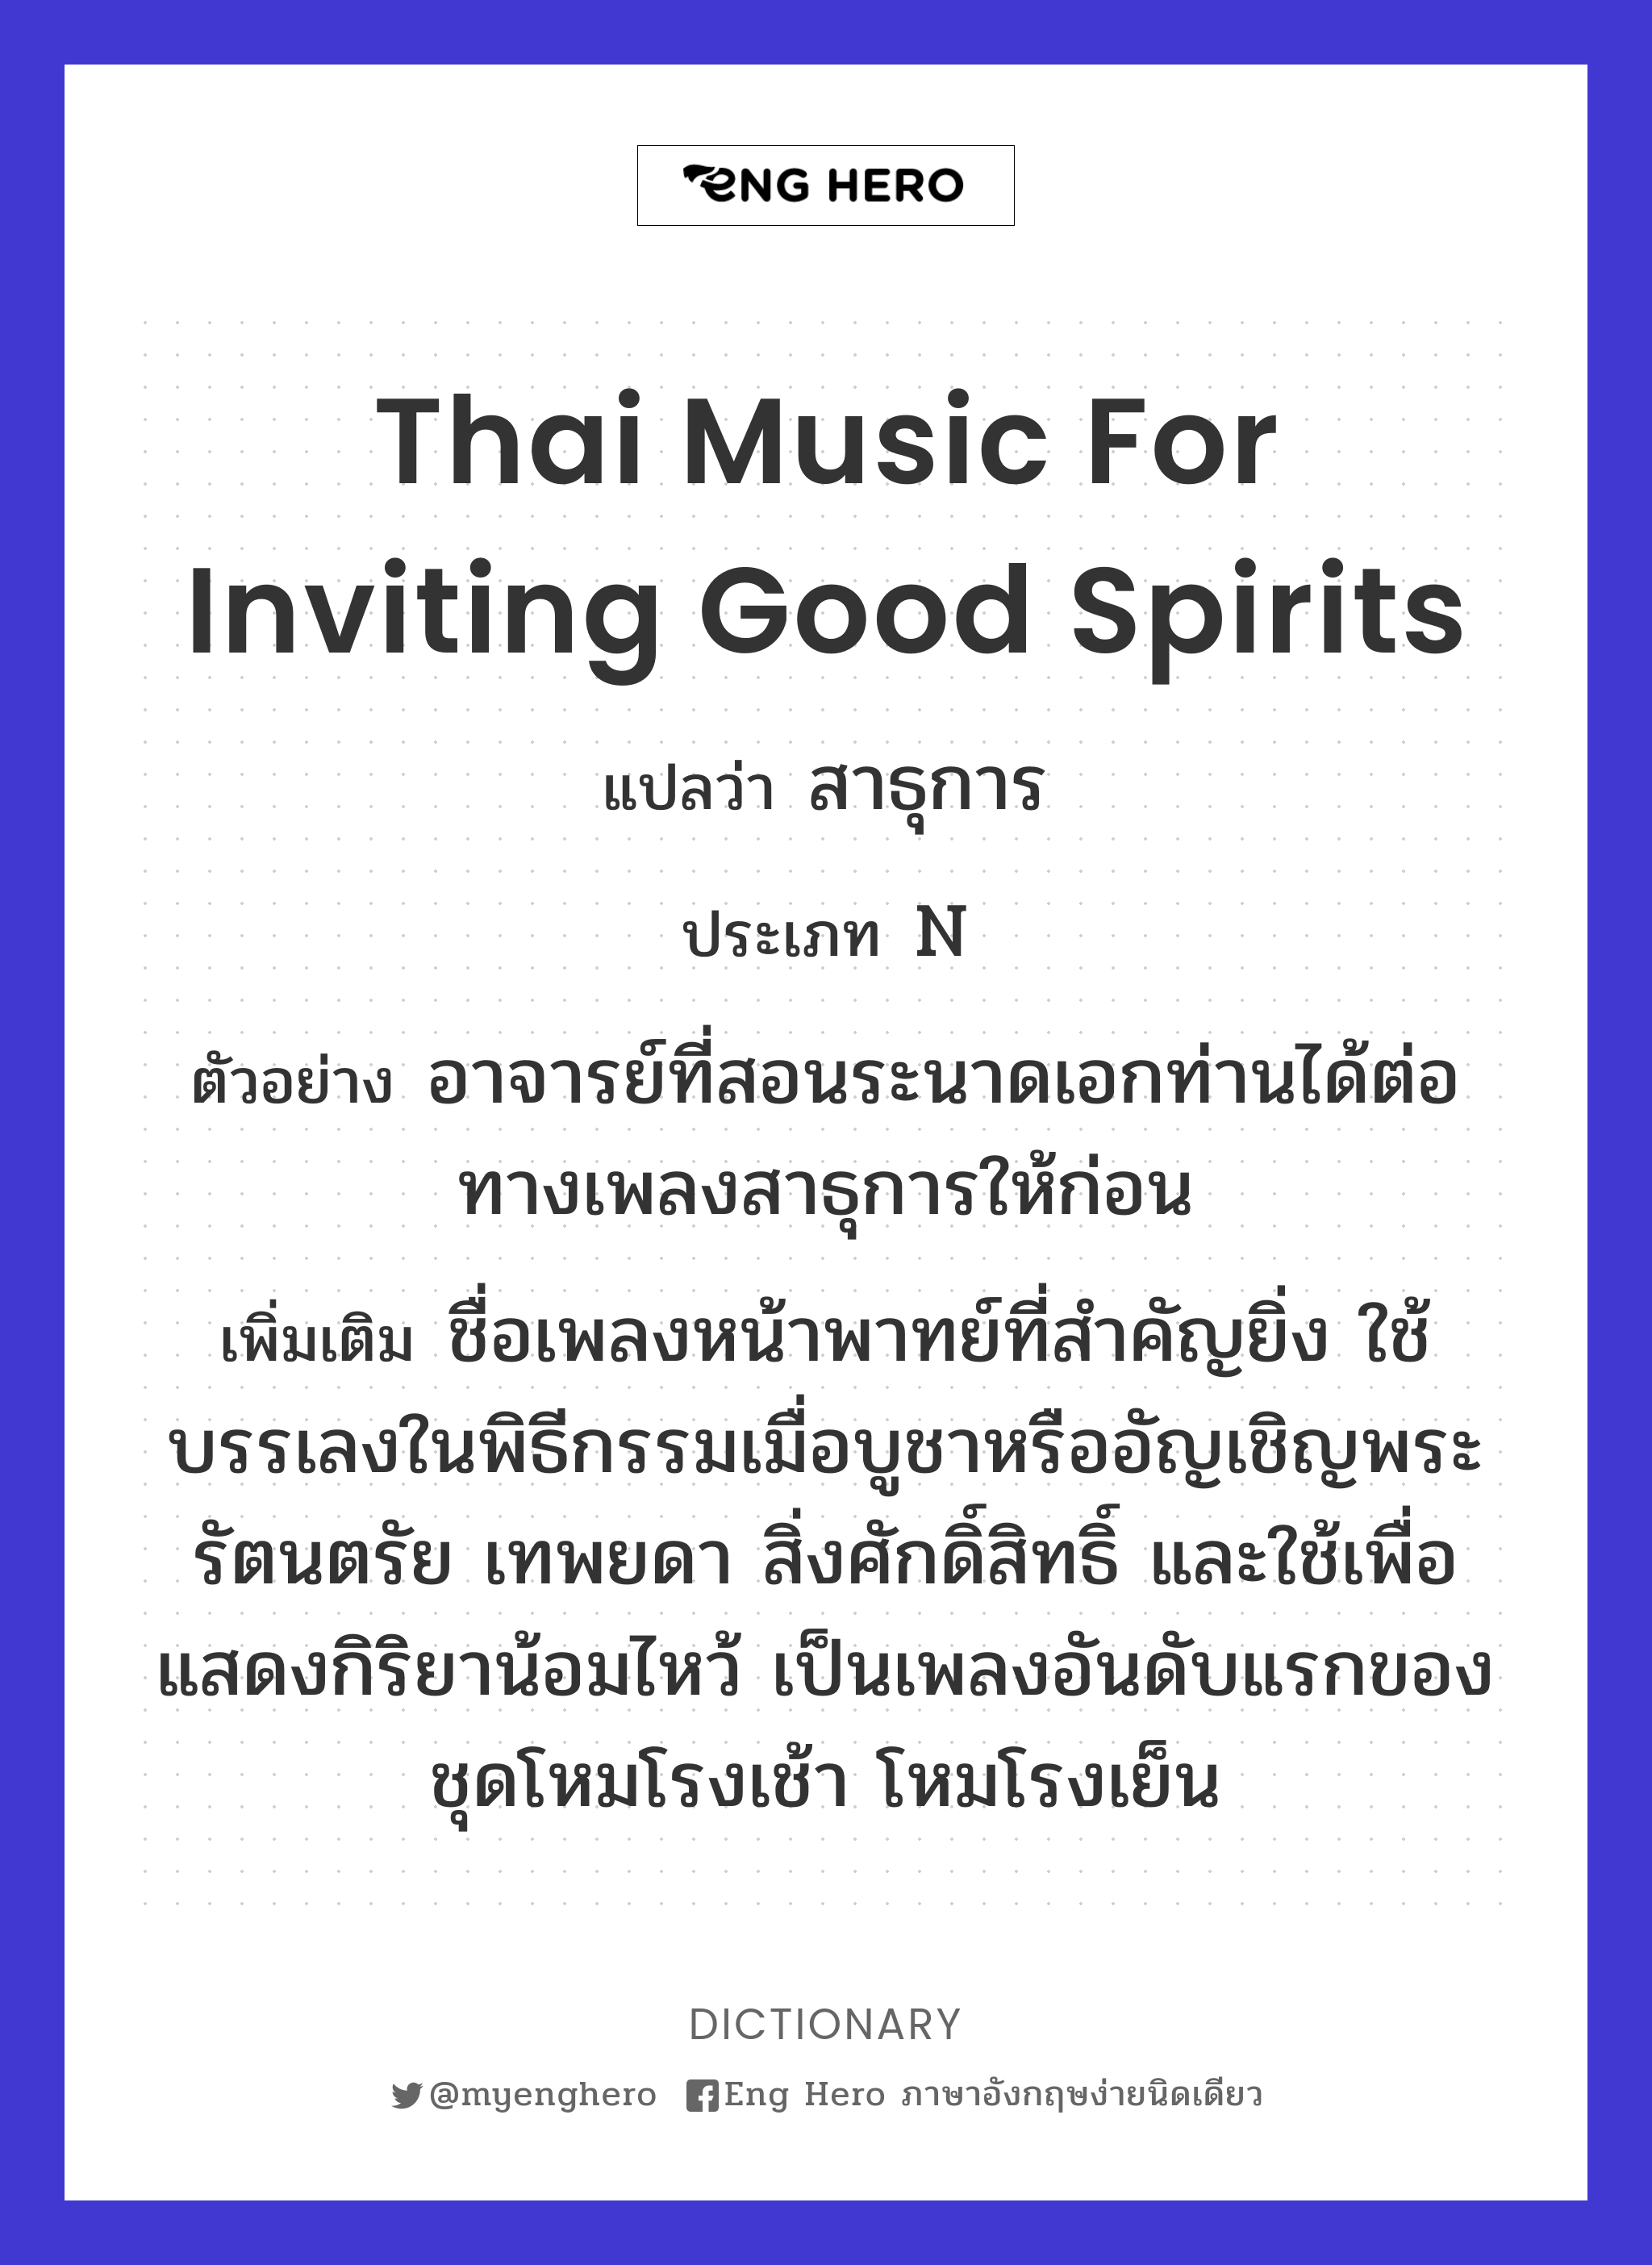 Thai music for inviting good spirits